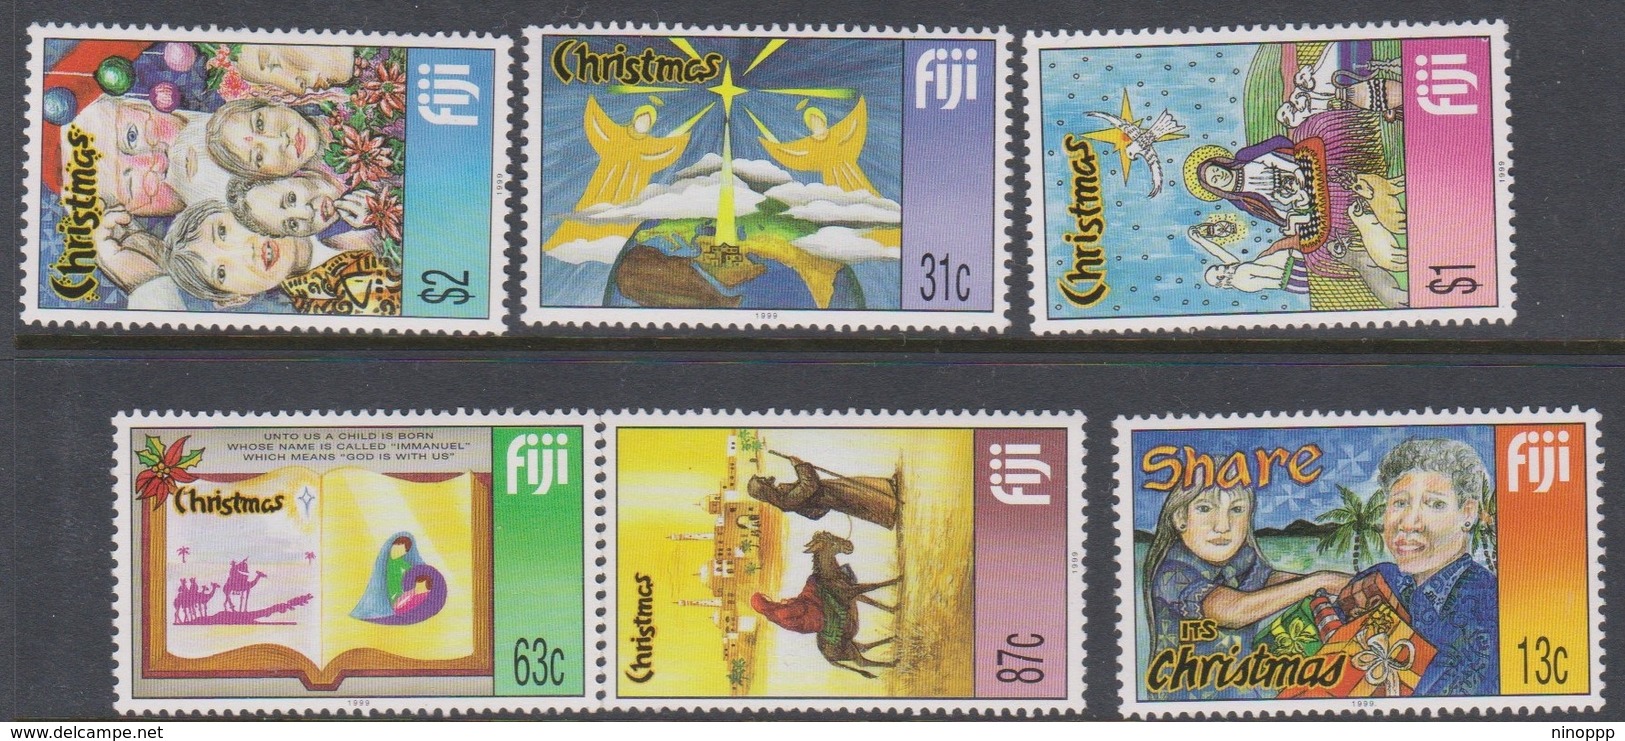 Fiji SG 1068-1073 1999 Christmas, Mint Never Hinged - Fiji (1970-...)